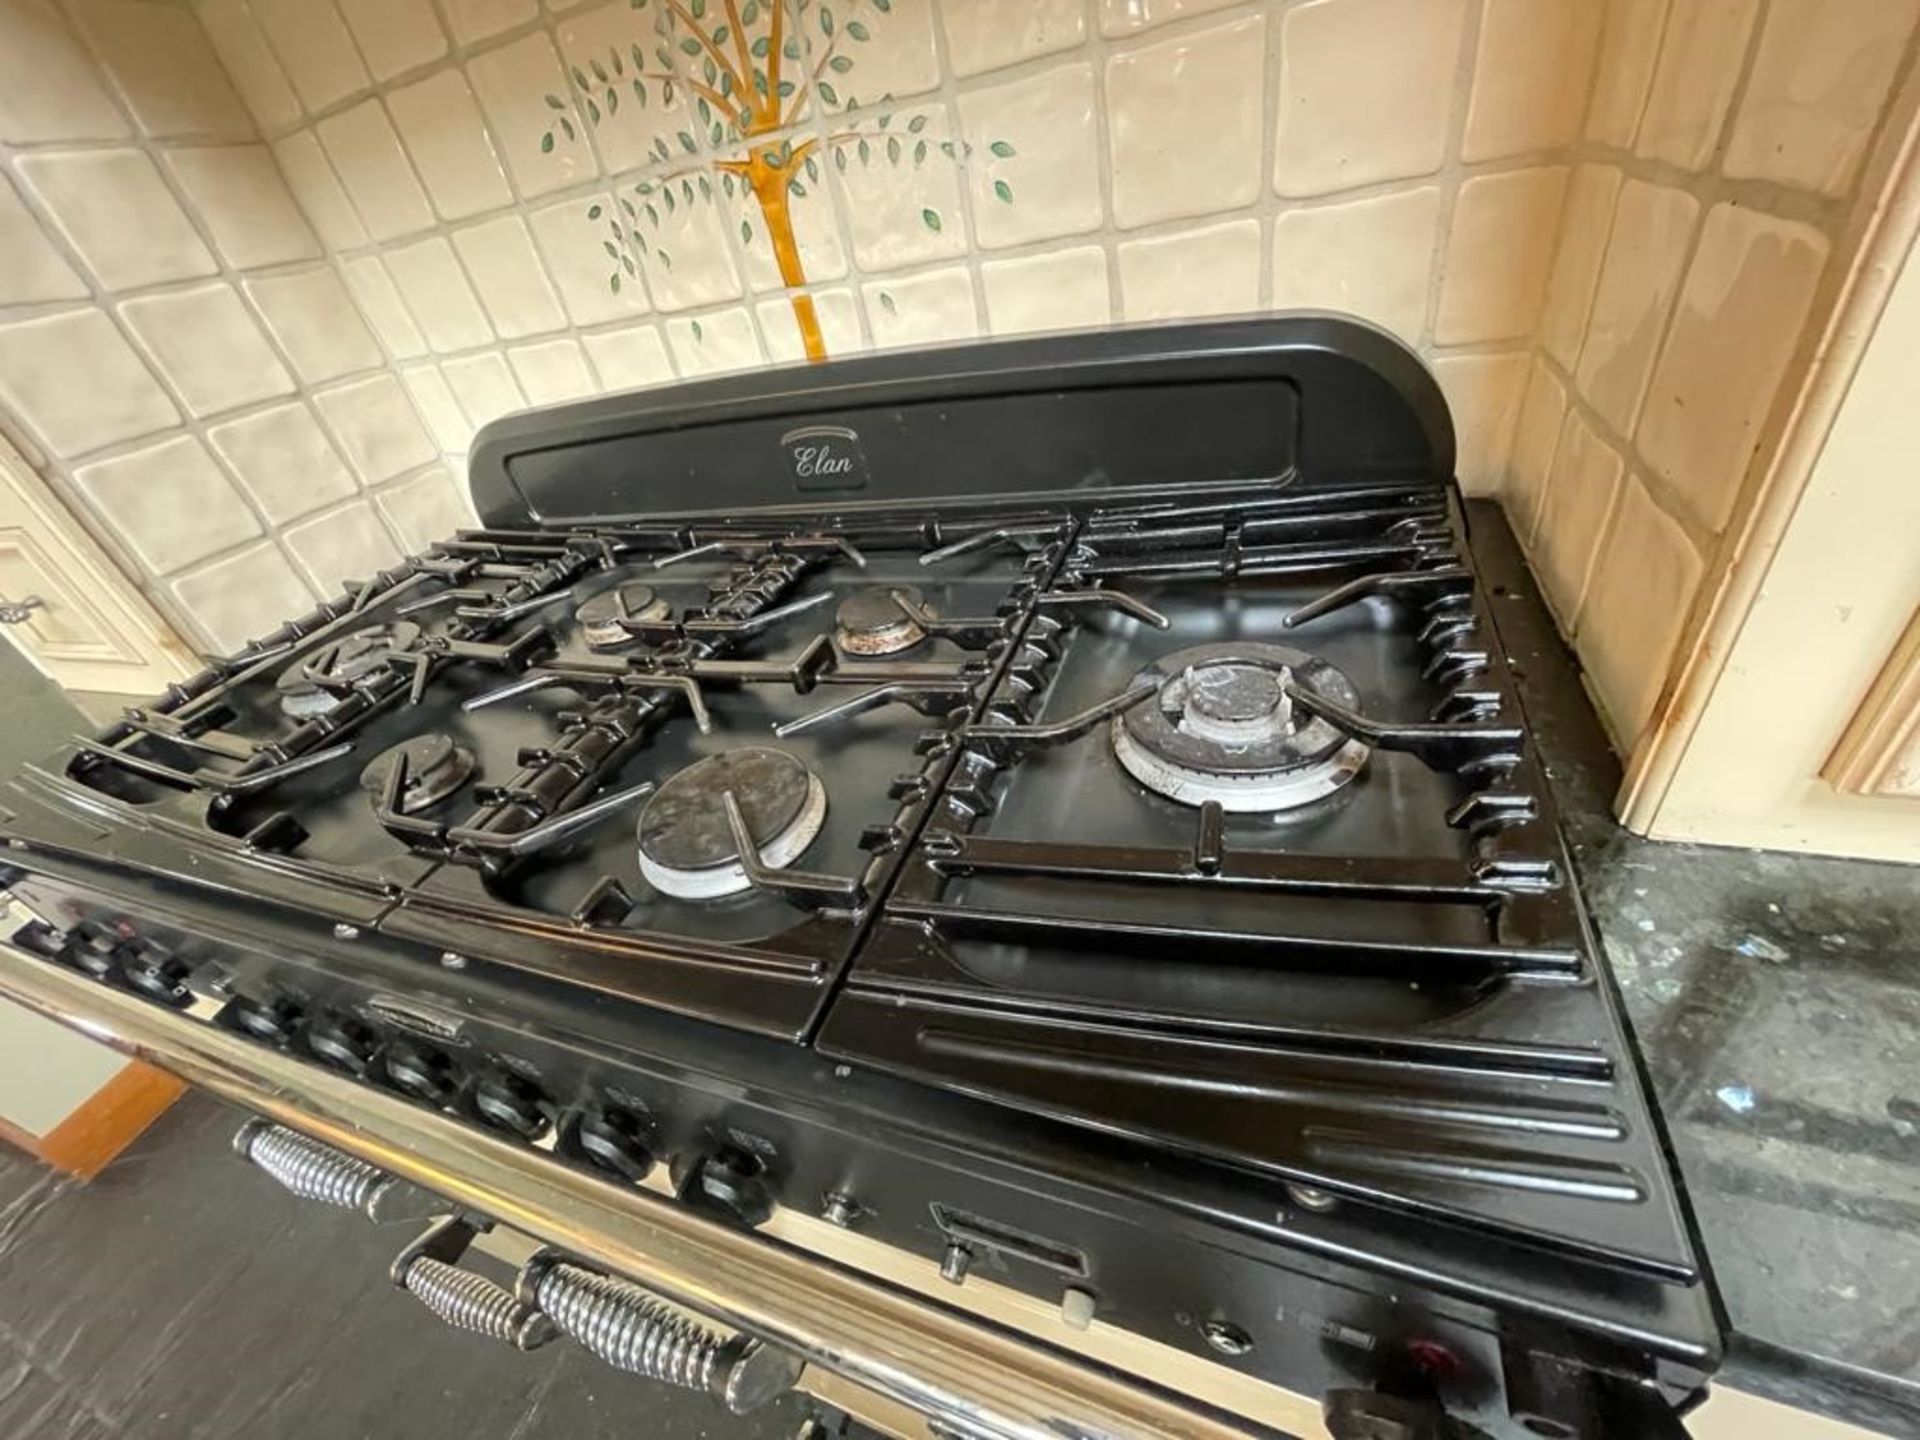 1 x RANGEMASTER ELAN 110 Dual Fuel Kitchen Range Cooker In Cream, Black And Chrome - Dimensions: 110 - Image 11 of 13